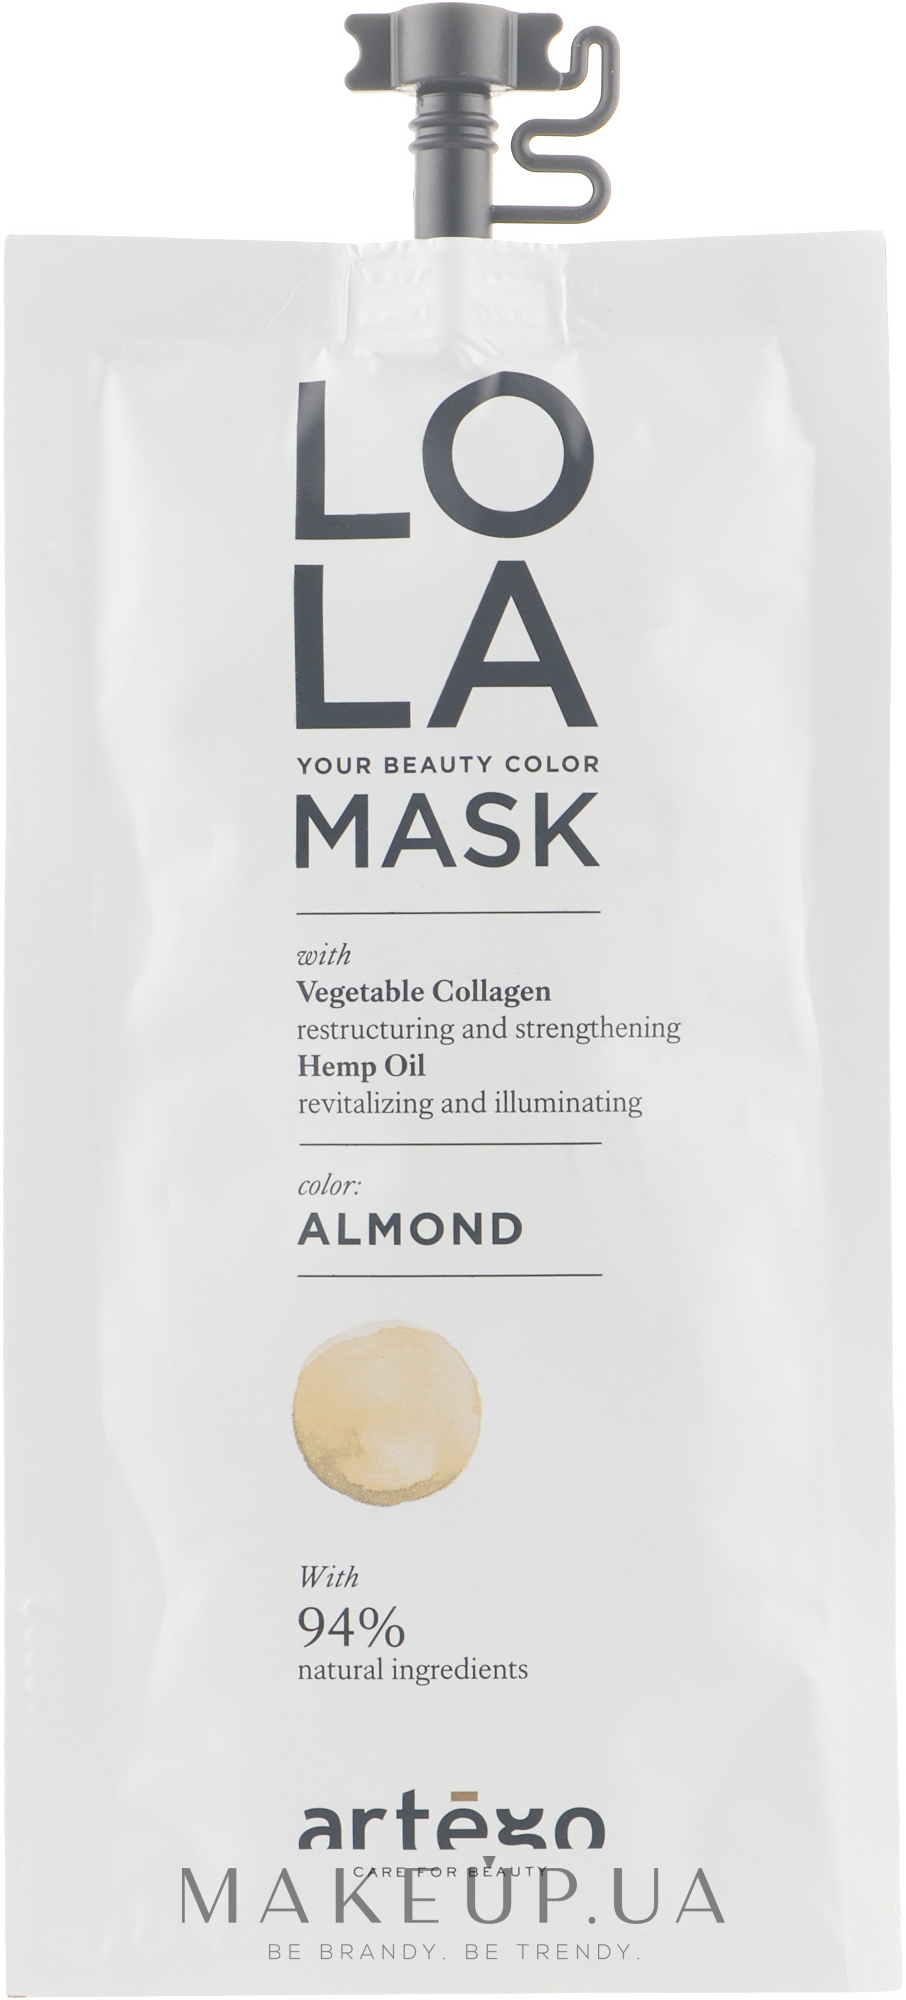 Оттеночная маска - Artego LOLA Your Beauty Color Mask (мини) — фото Almond